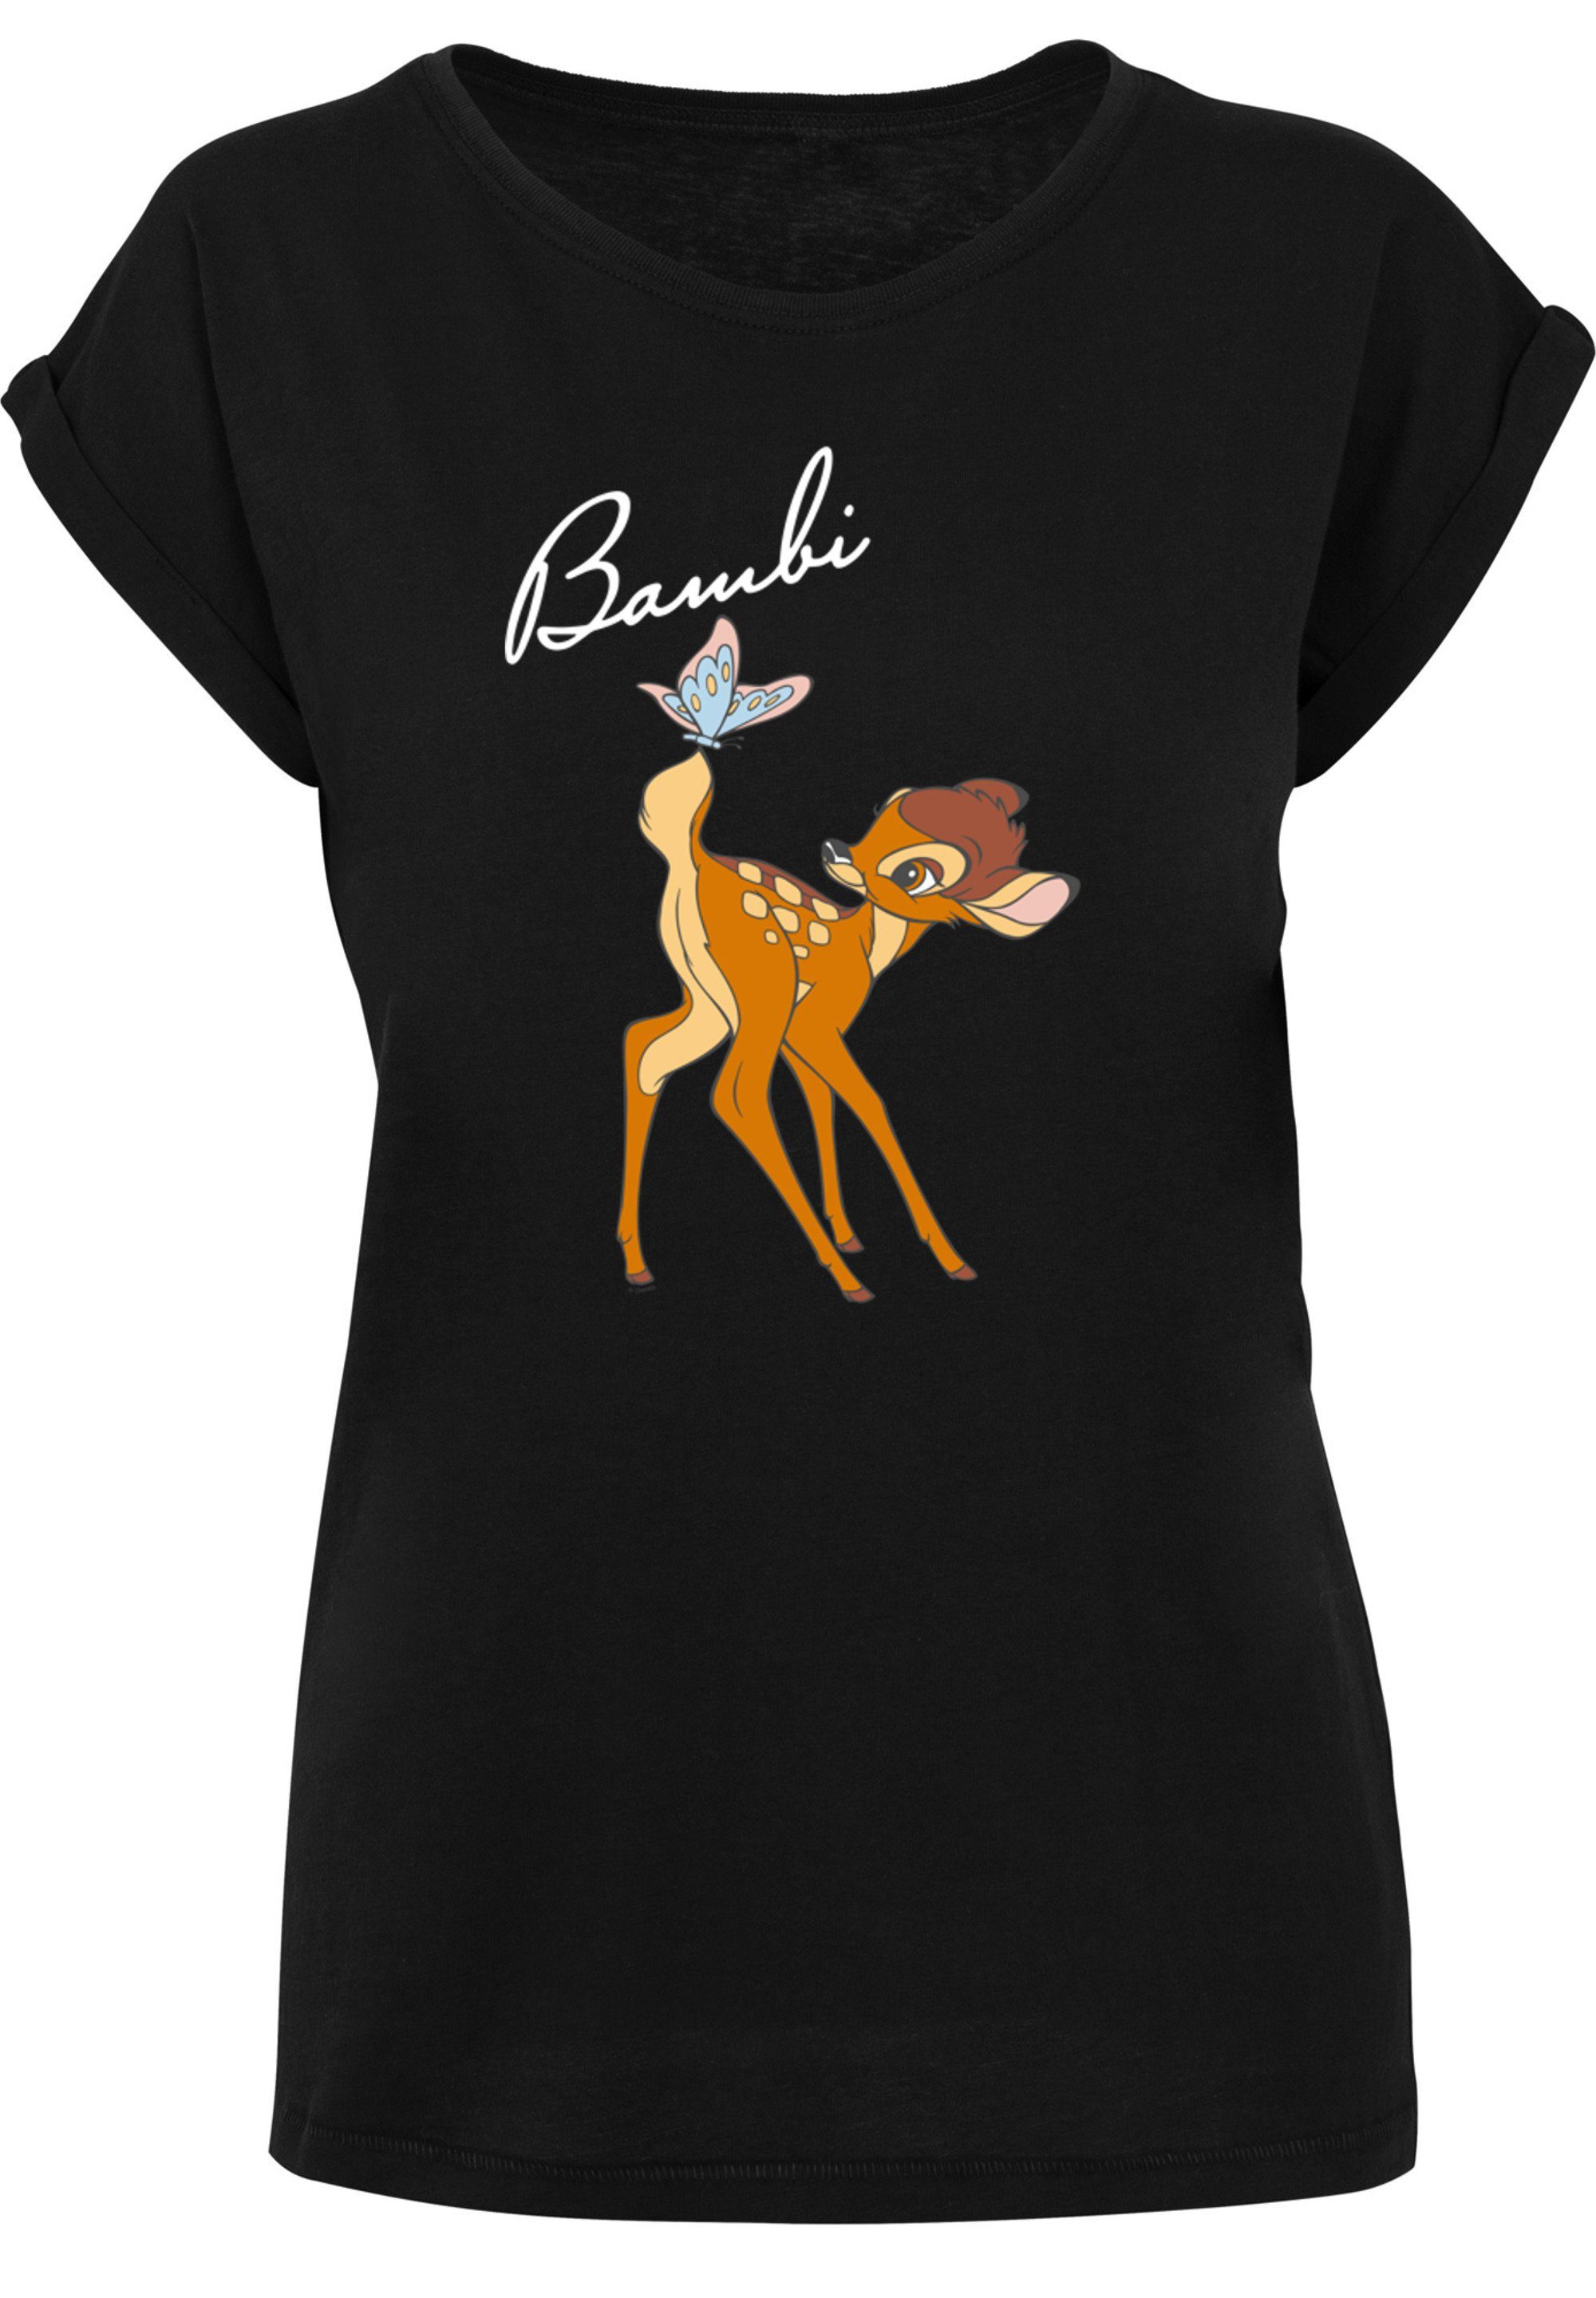 Tail T-Shirt Schmetterling Disney Print Bambi F4NT4STIC